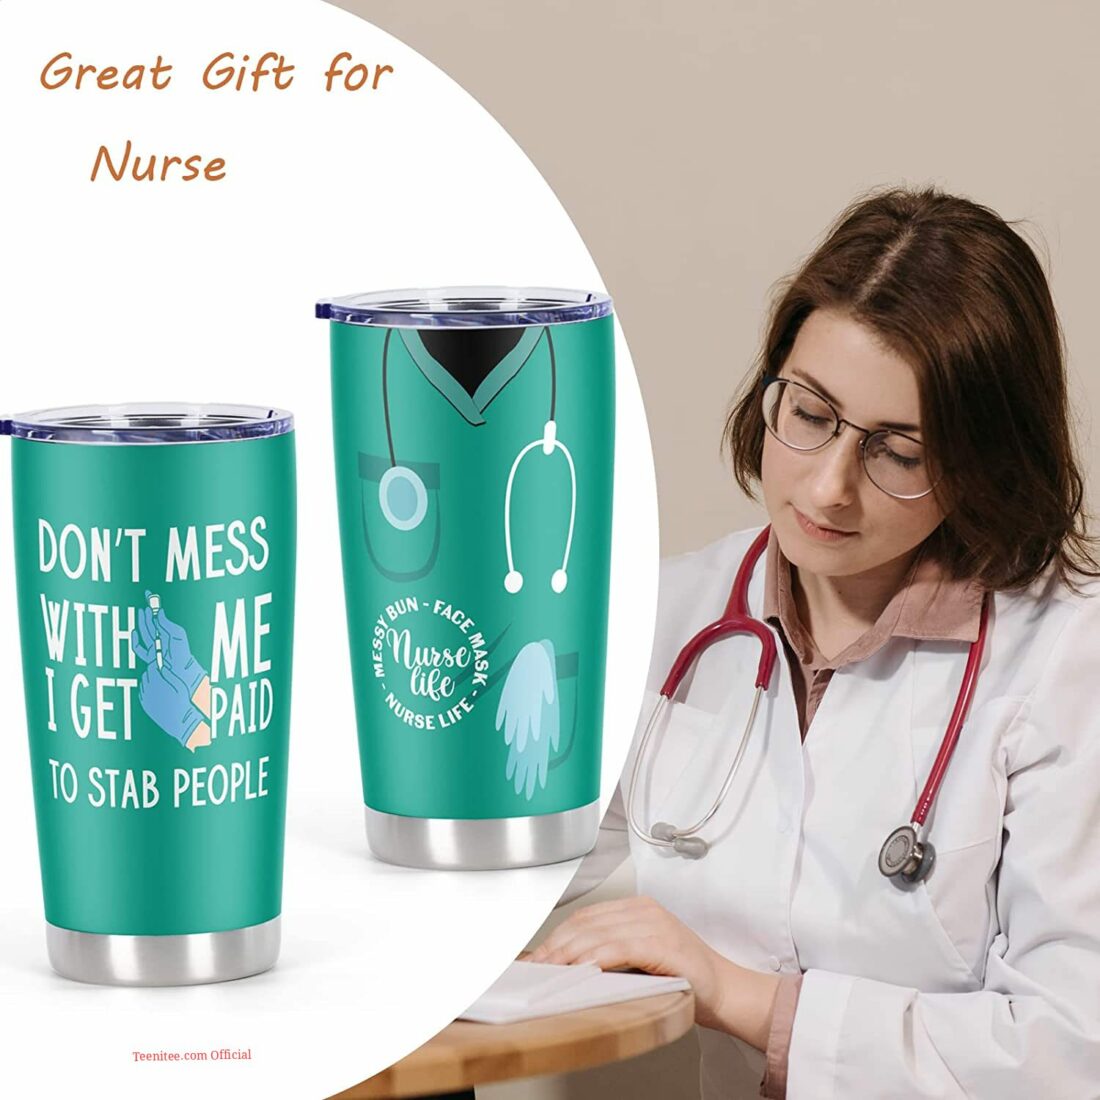 Cosictic tumbler gift for nurse| funny tumbler gift for nurse